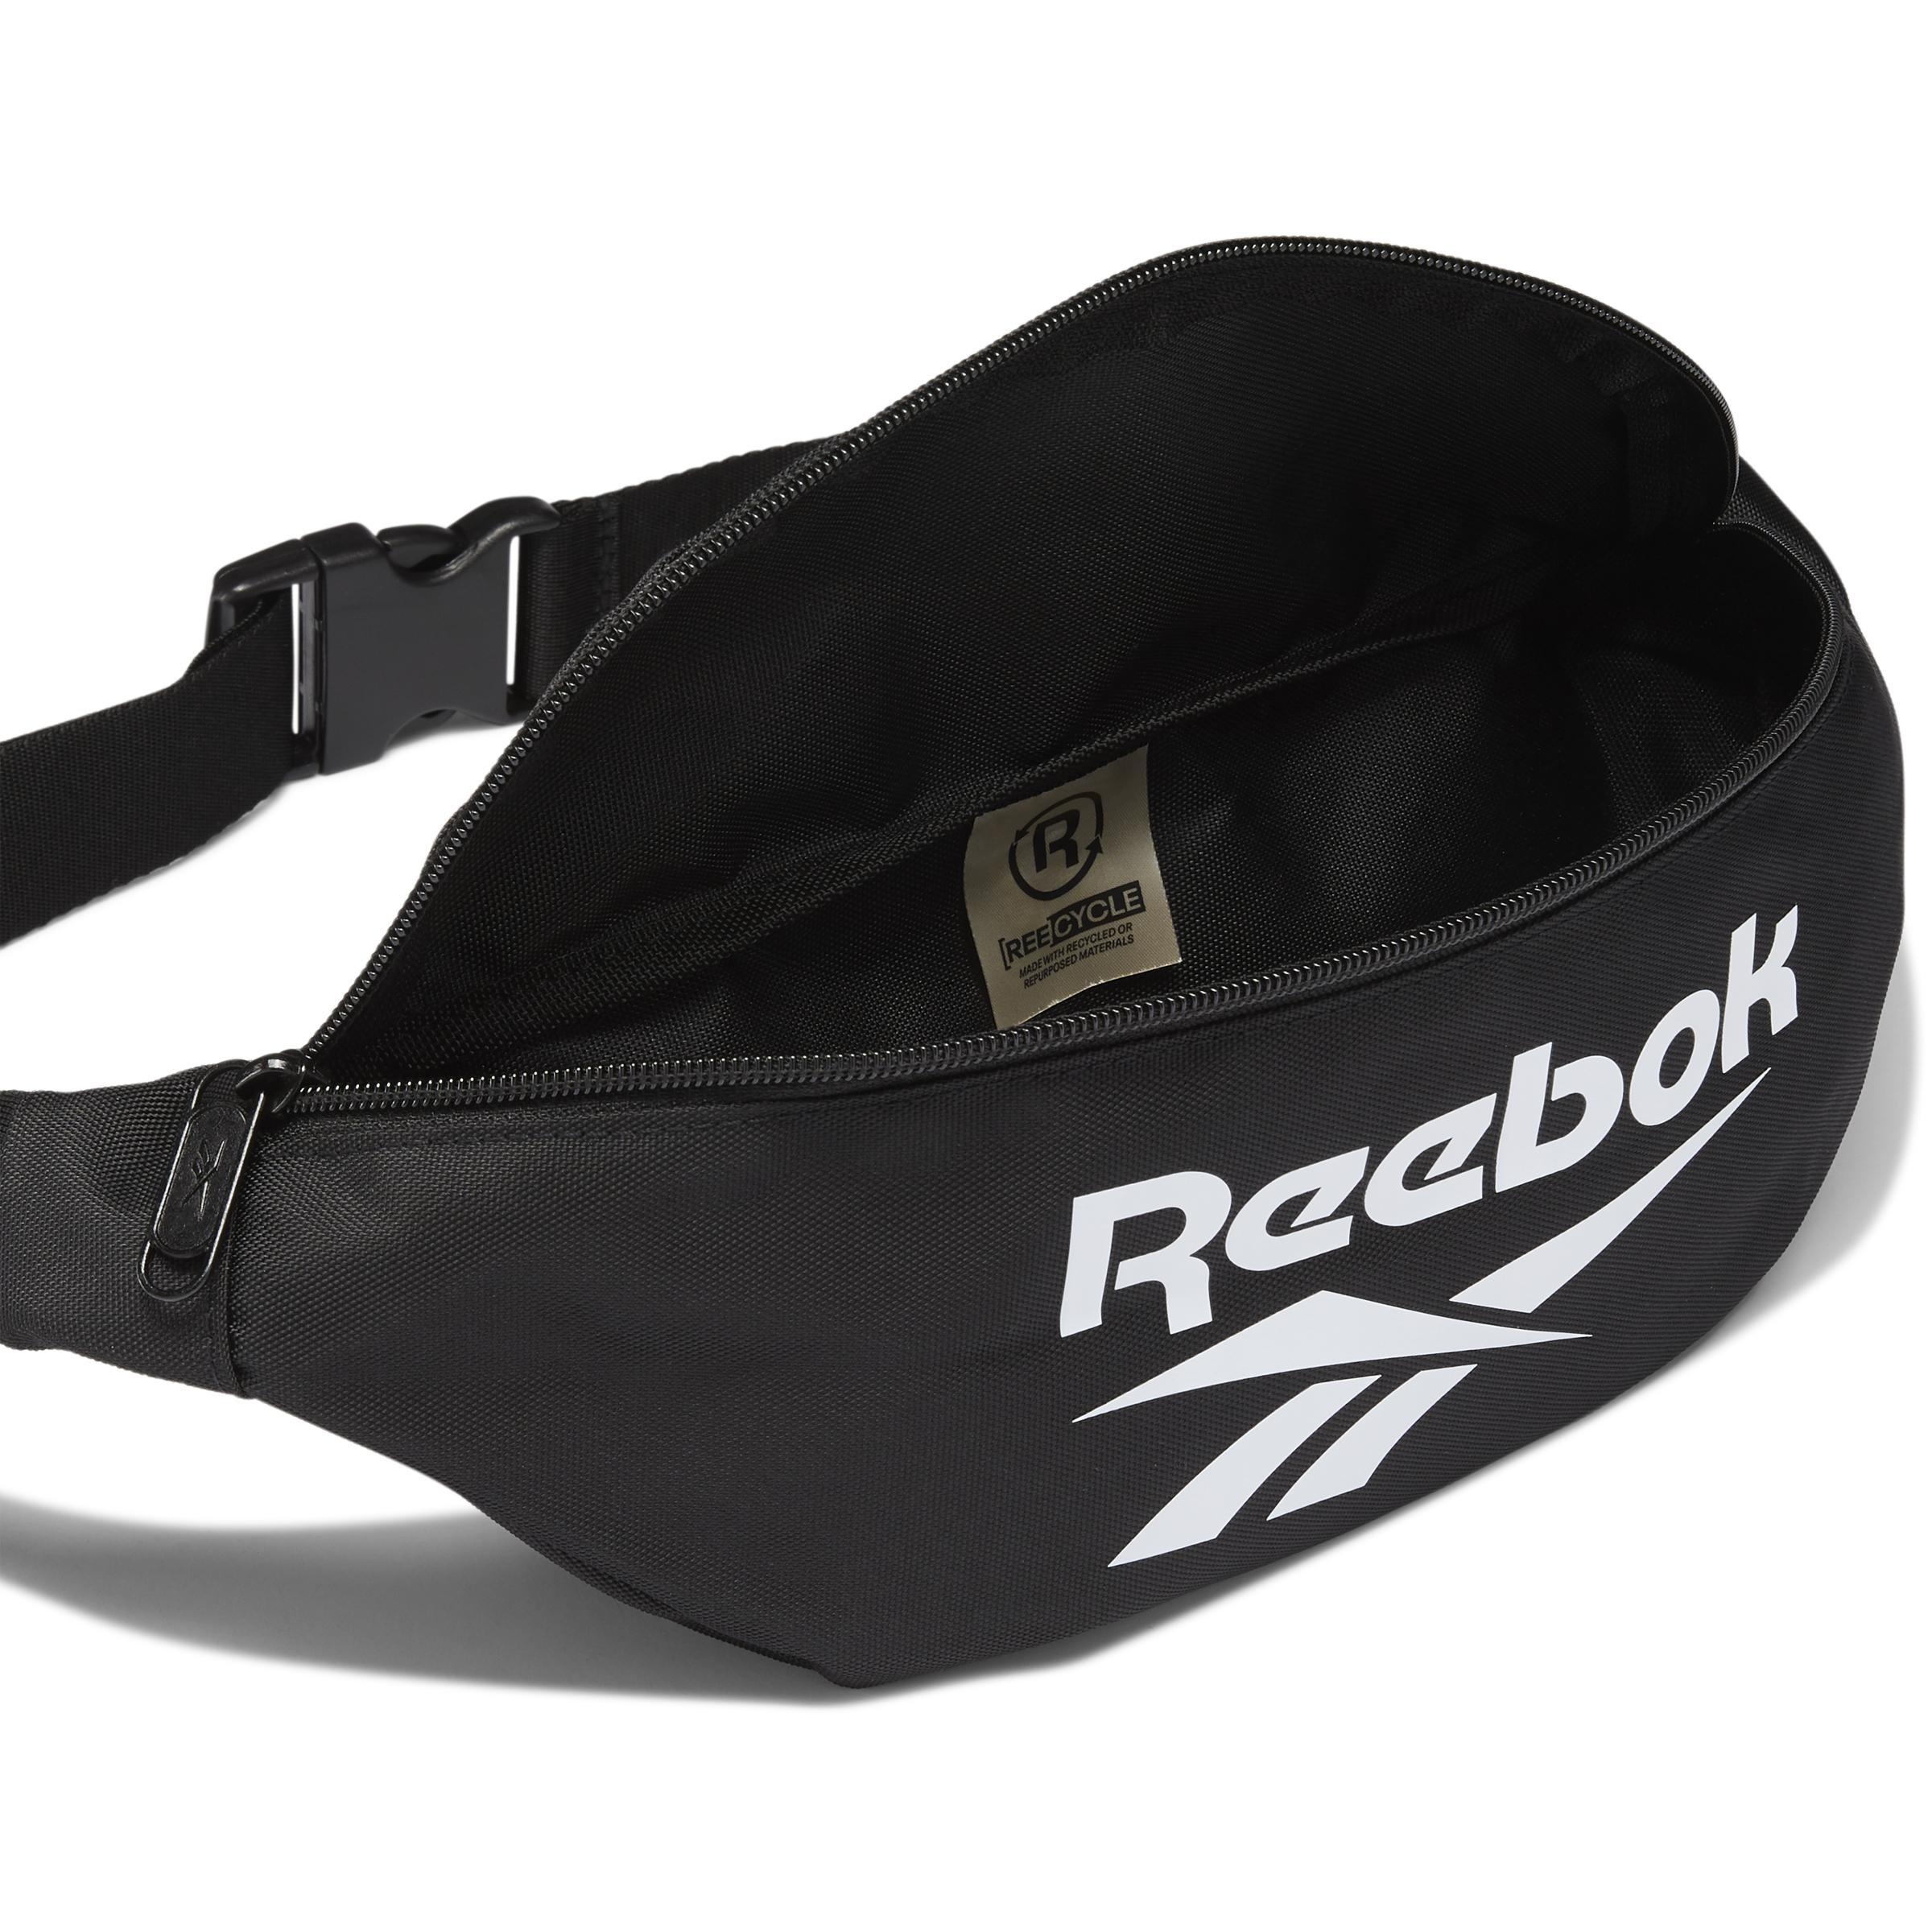 Reebok - Unisex Classics Foundation Waist Bag, Black